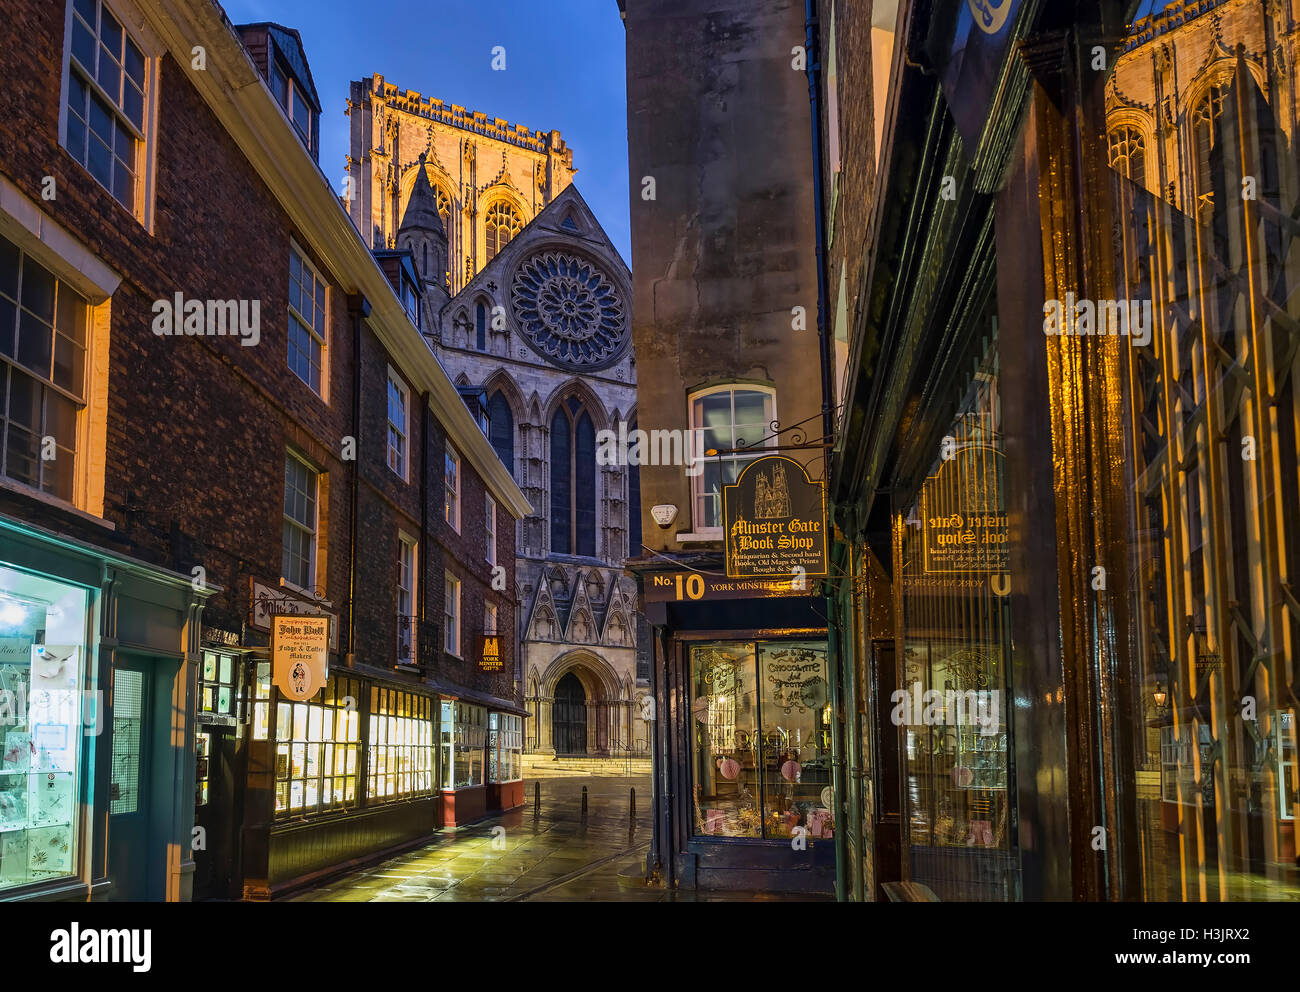 York Minster and Minster Gate passage at night, City of York, North Yorkshire, England, UK Stock Photo